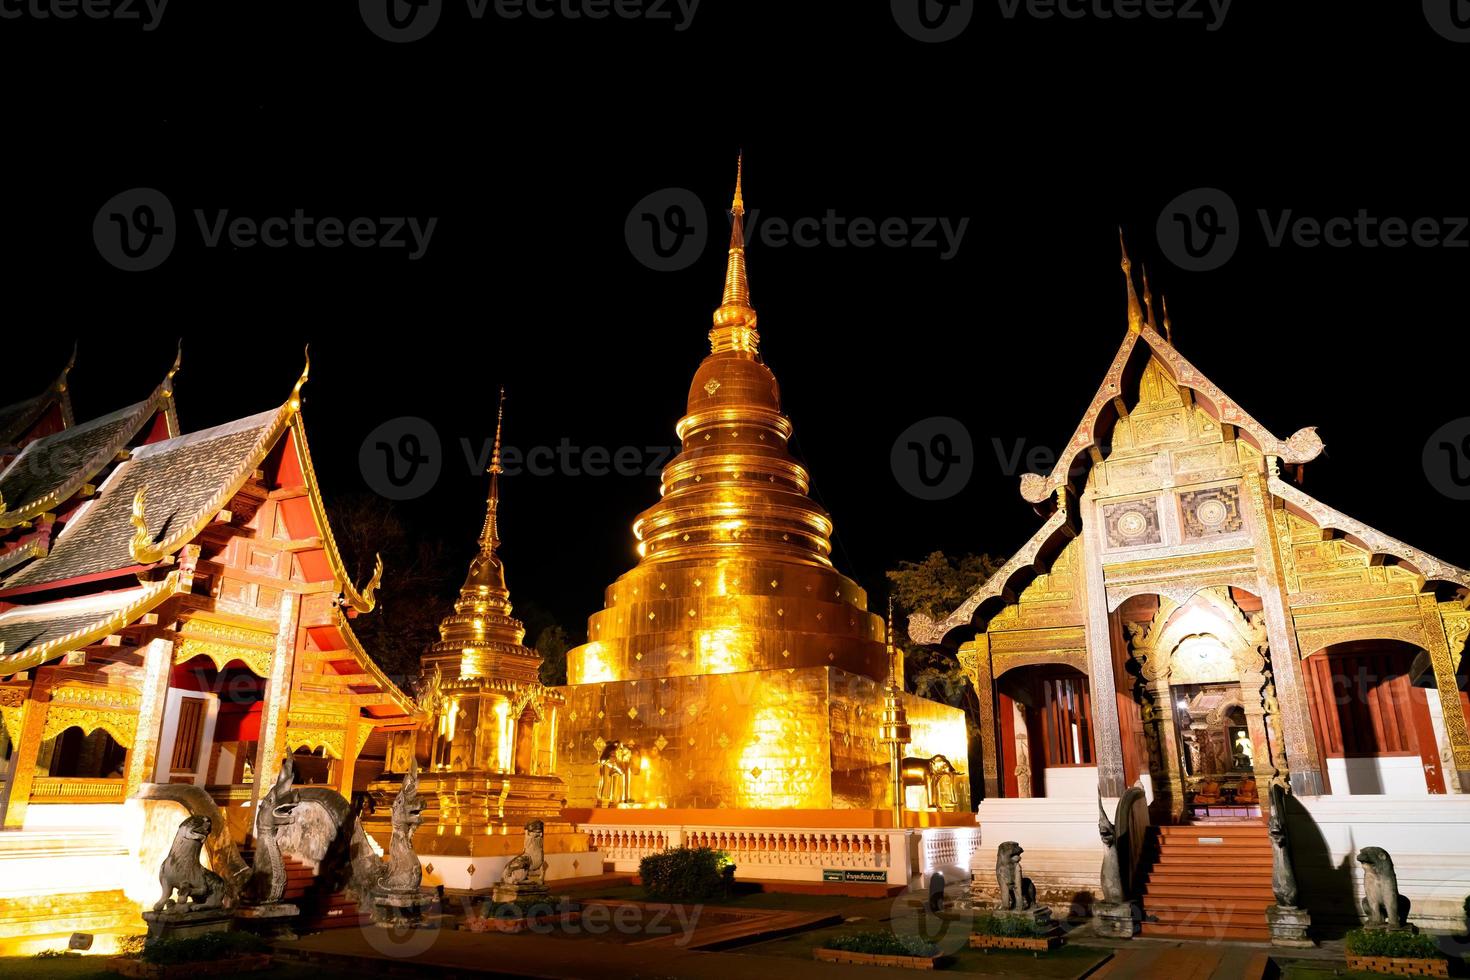 prachtige architectuur bij wat phra sing waramahavihan-tempel 's nachts in de provincie chiang mai, thailand foto